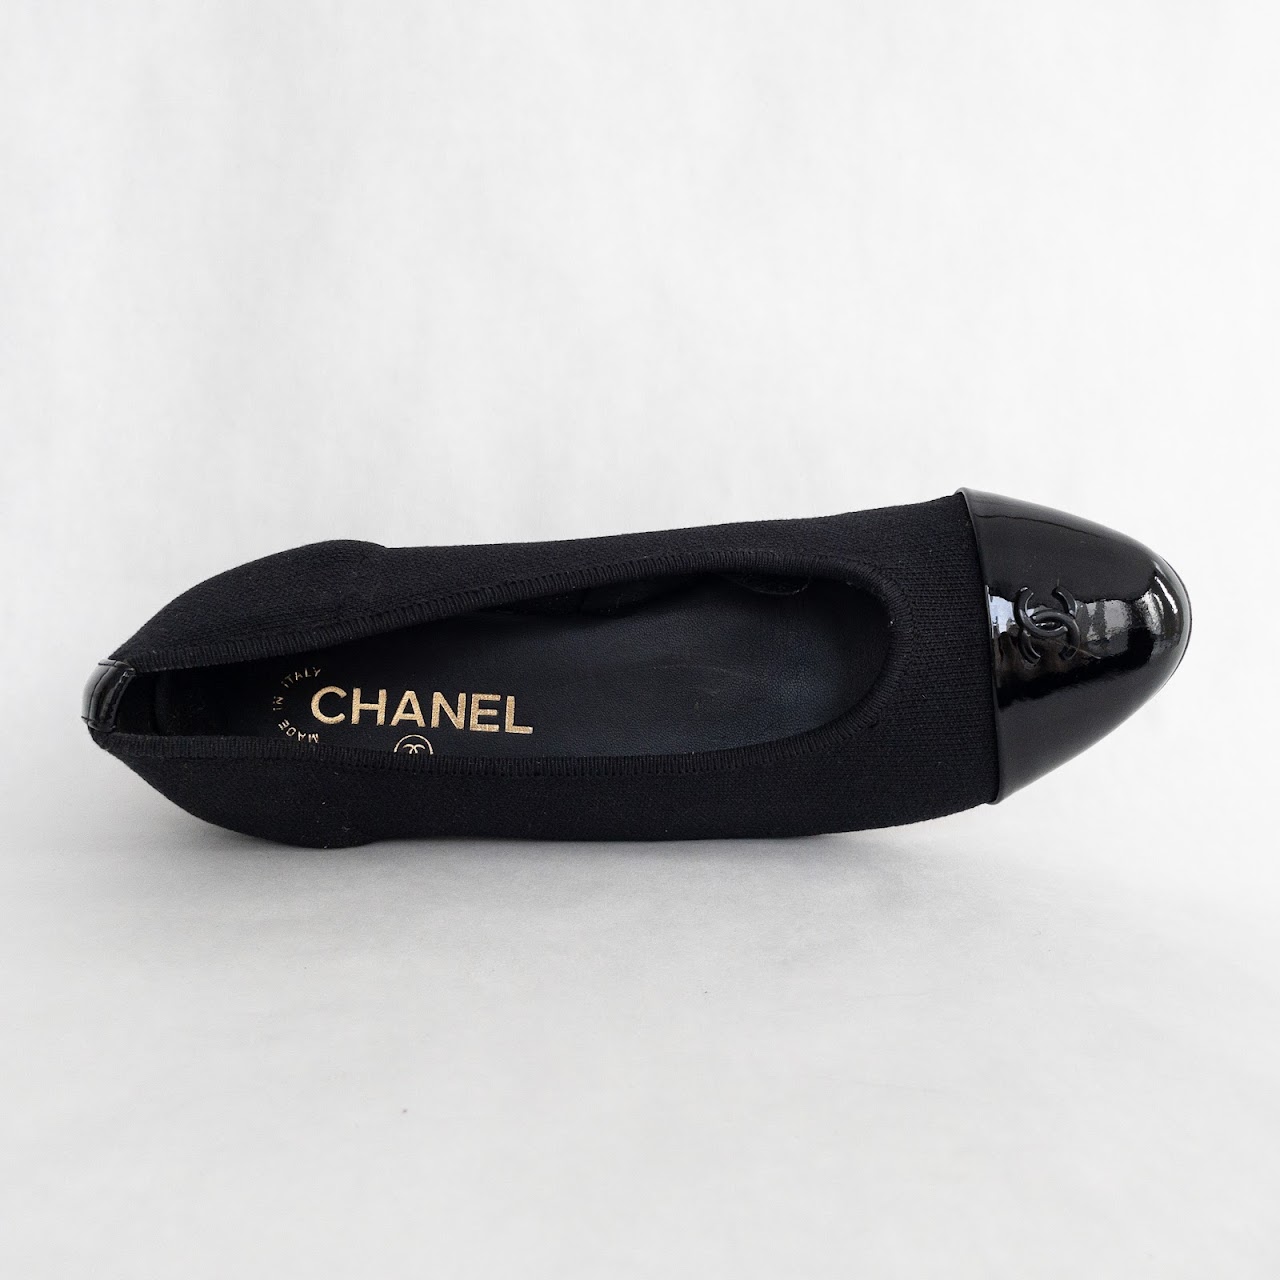 Chanel Patent Leather Cap Ballet Flats